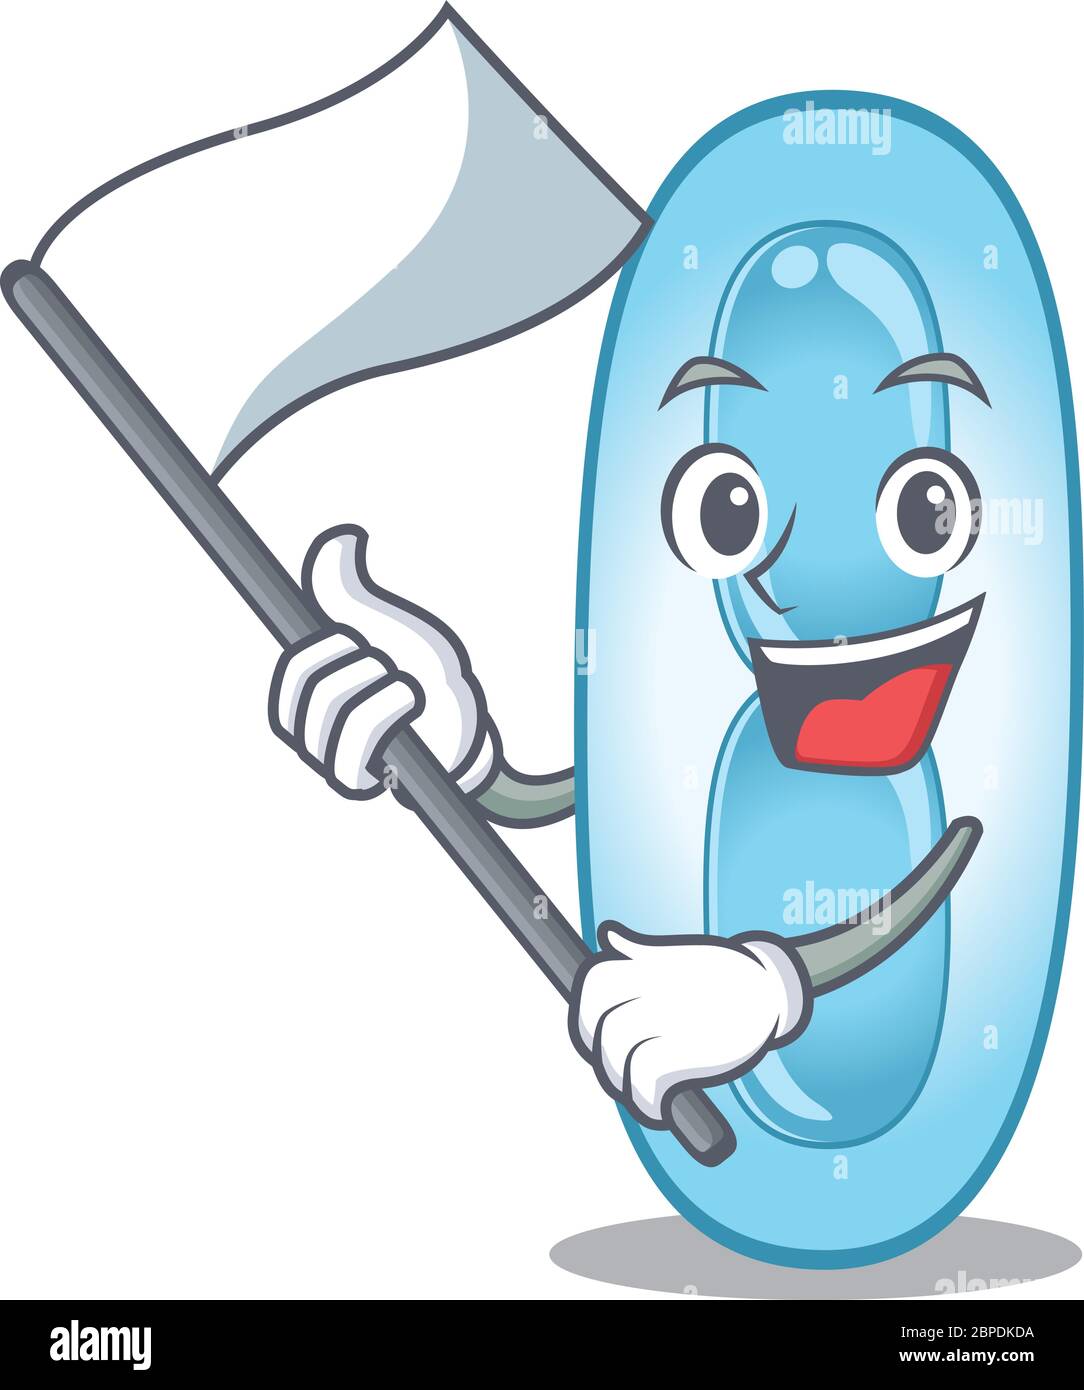 A heroic klebsiella pneumoniae mascot character design with white flag Stock Vector